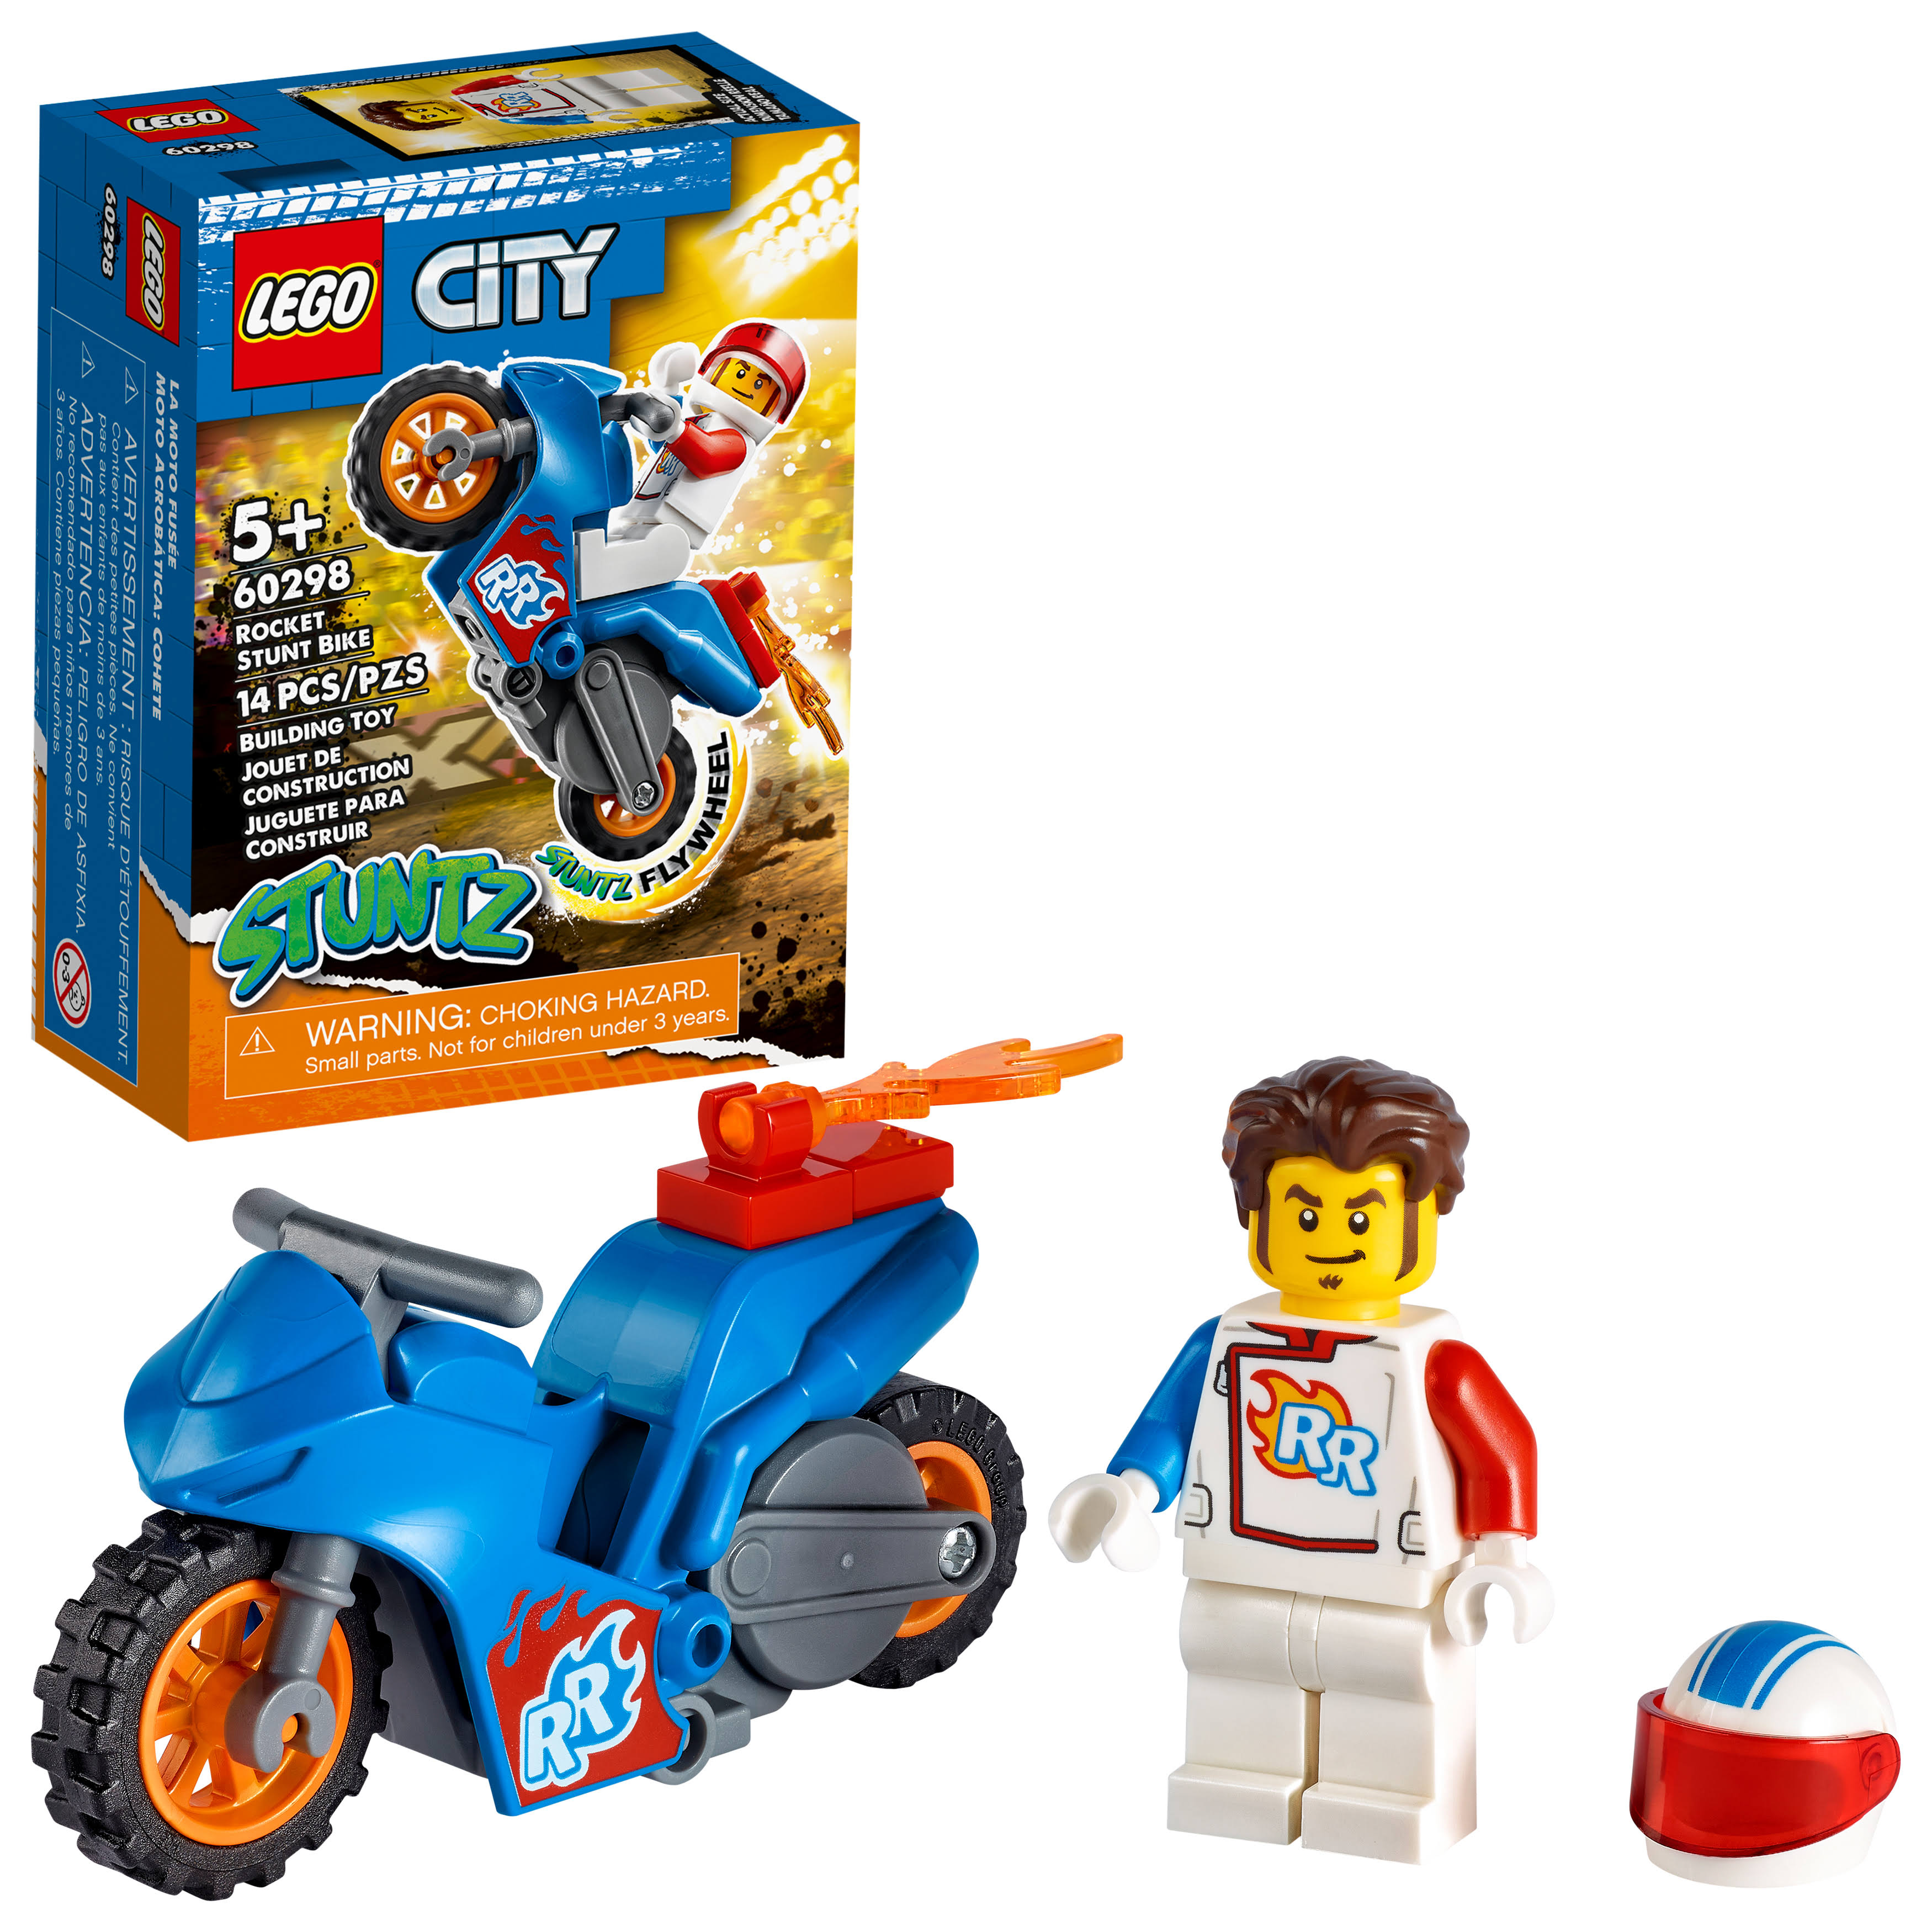 LEGO City Stuntz Rocket Stunt Bike - 60298